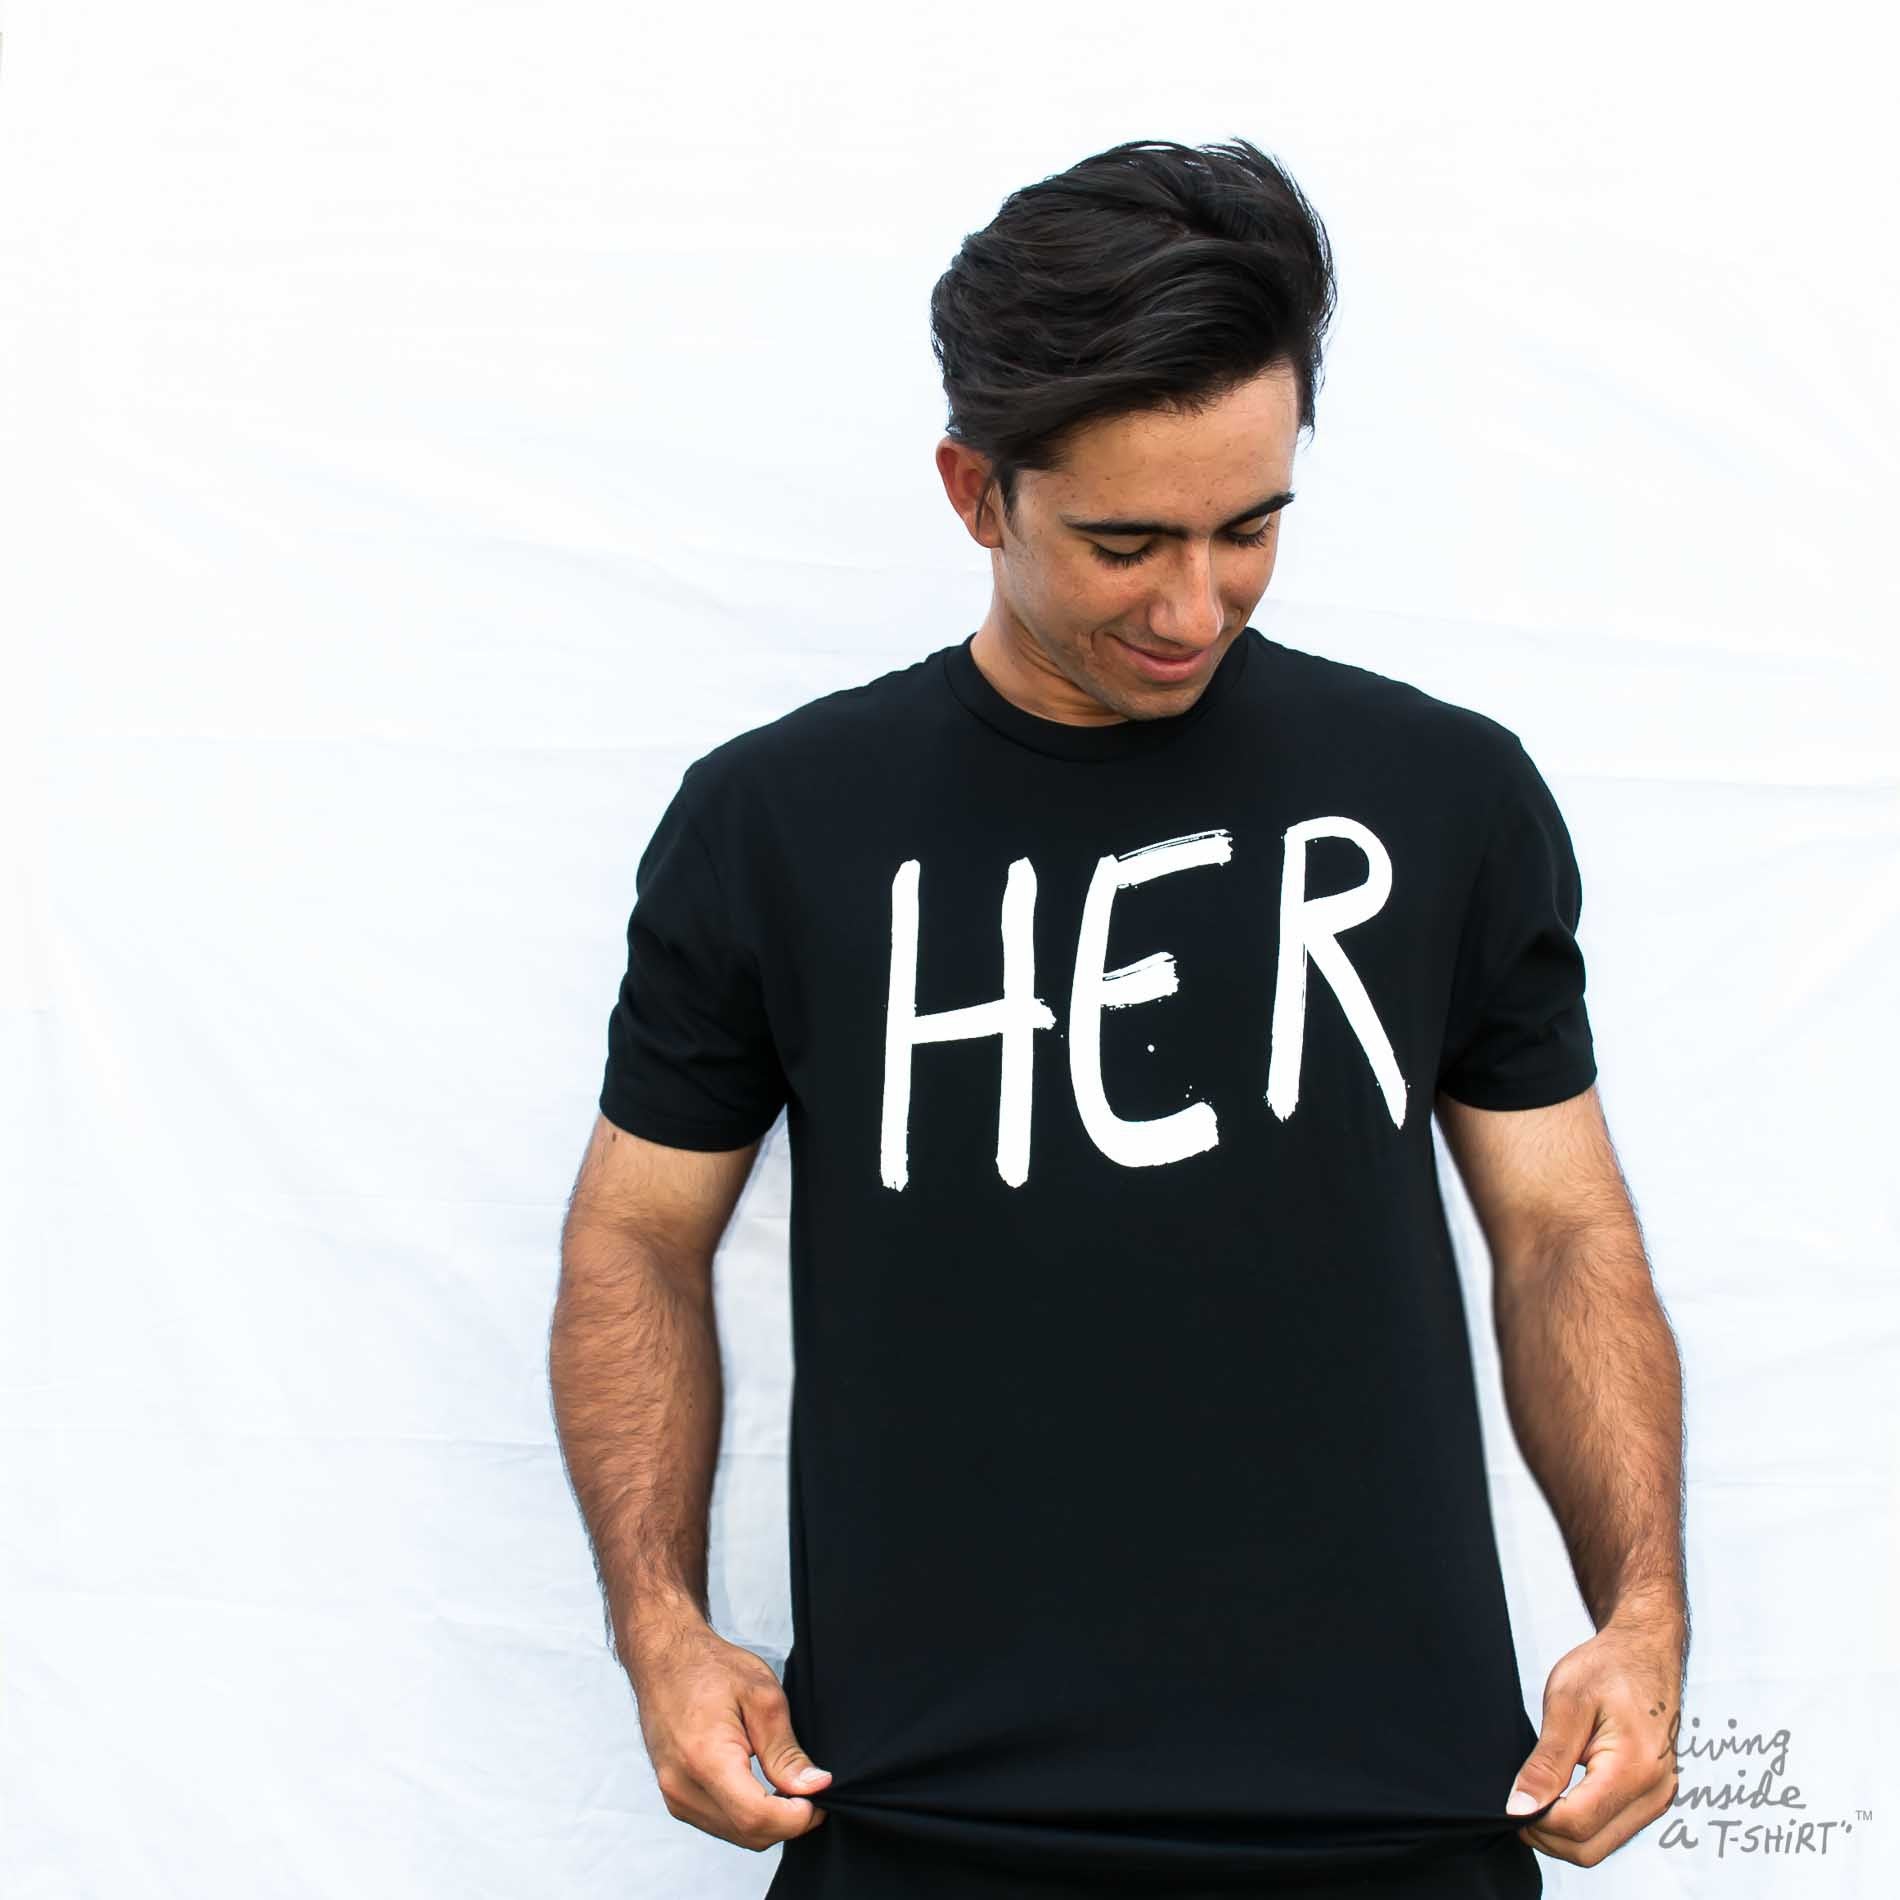 Her - Unisex T-shirt